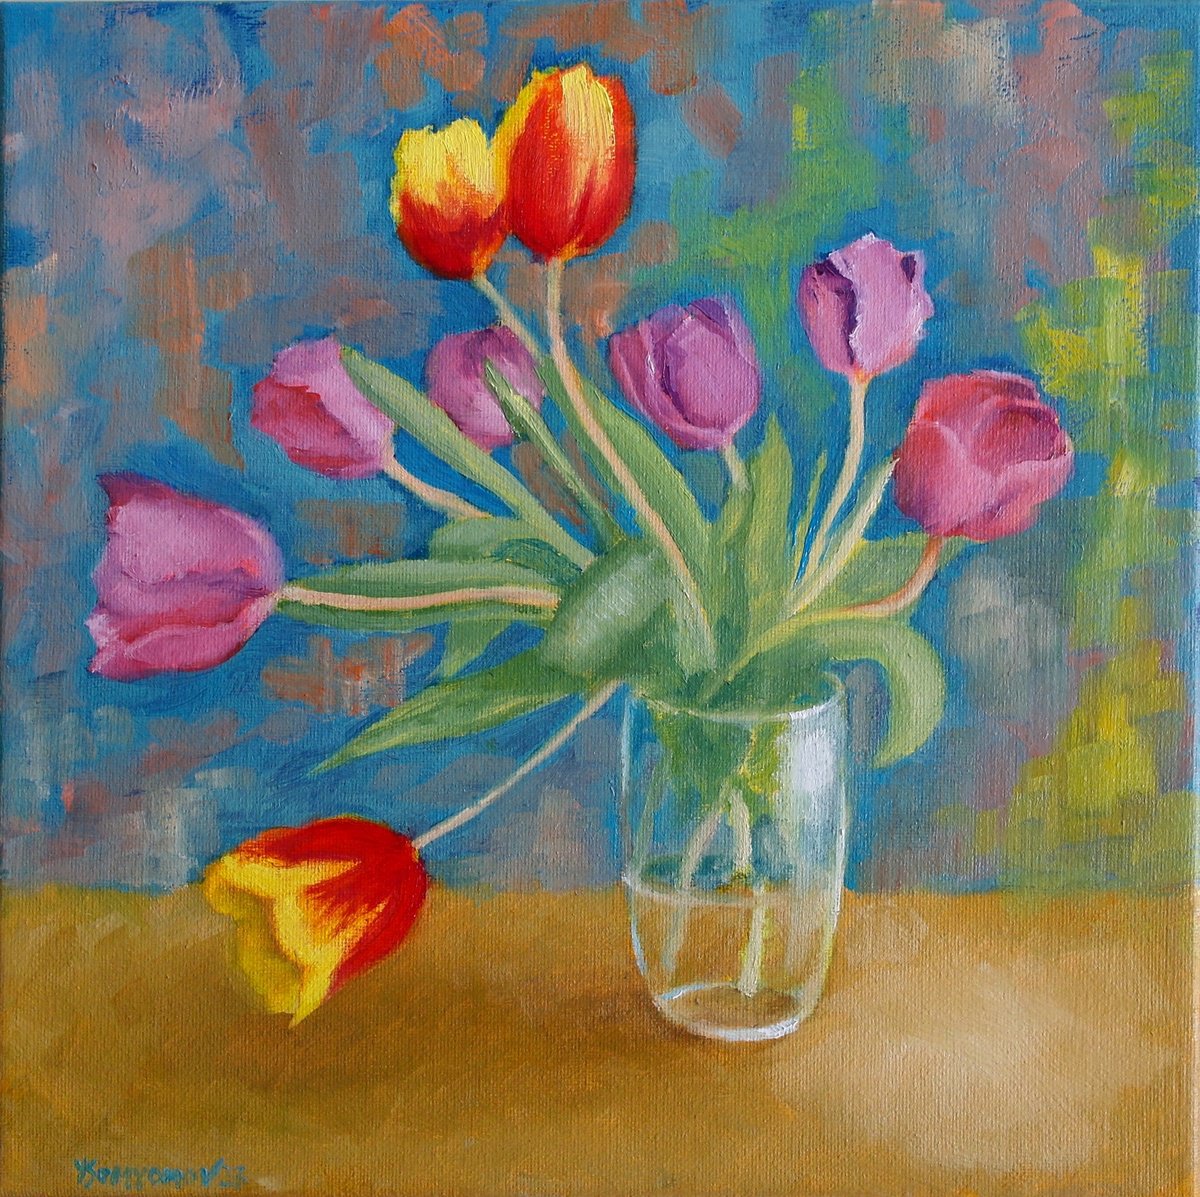 Spring Tulips by Juri Semjonov